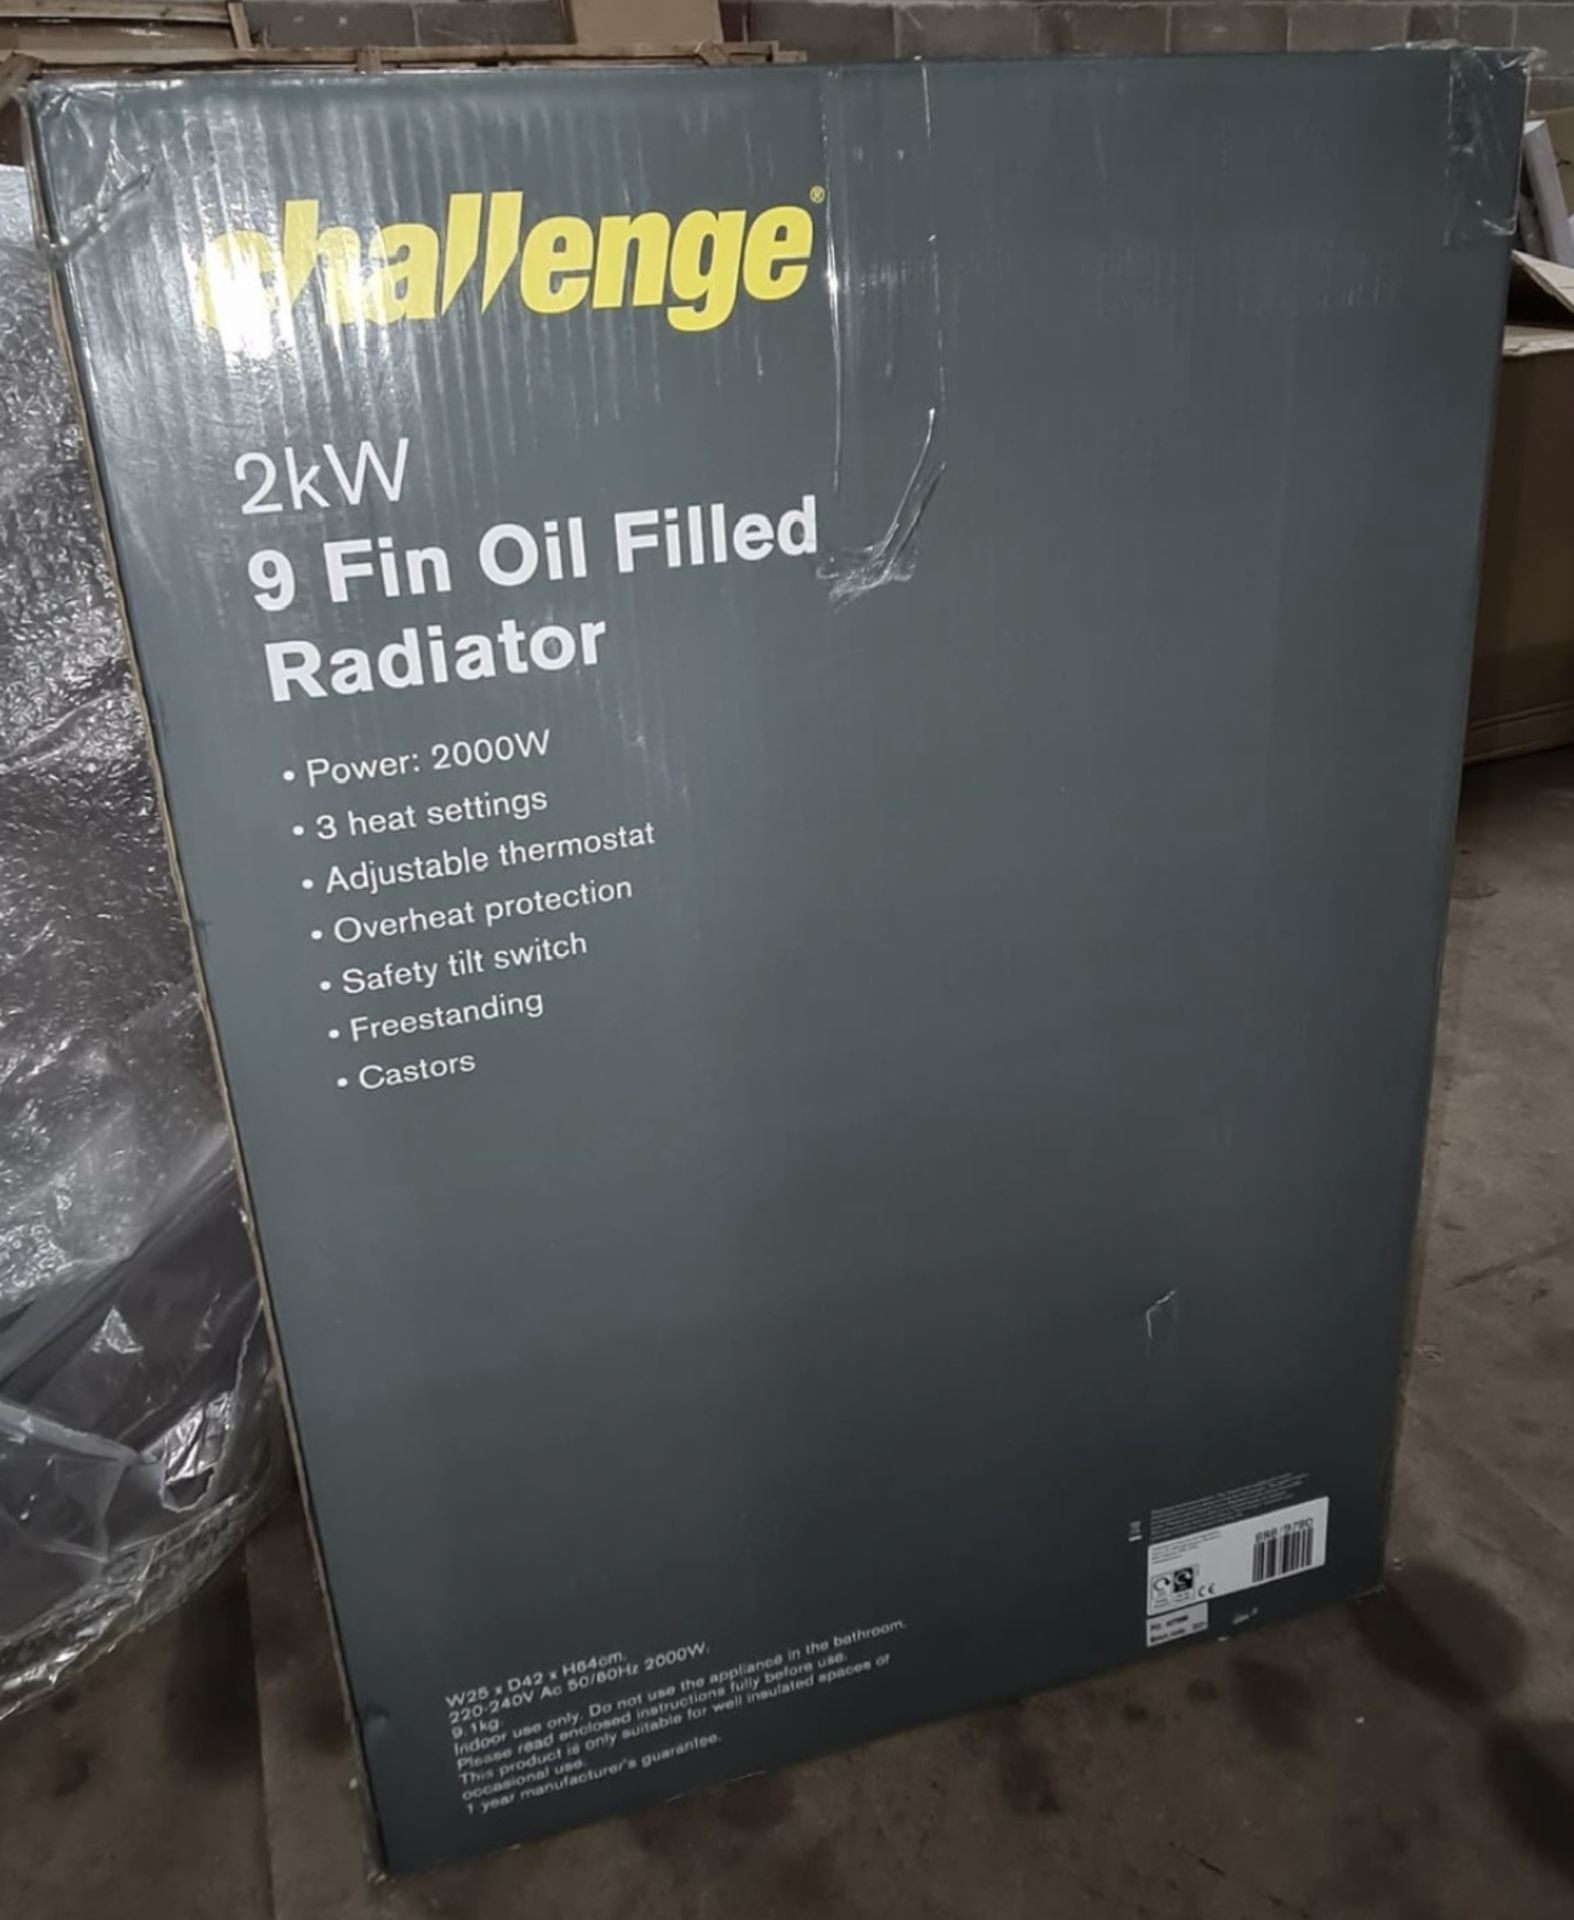 1 x CHALLENGE 2KW 9 FIN OIL FILLED RADIATOR ON CASTORS - RRP £95 - Image 2 of 2